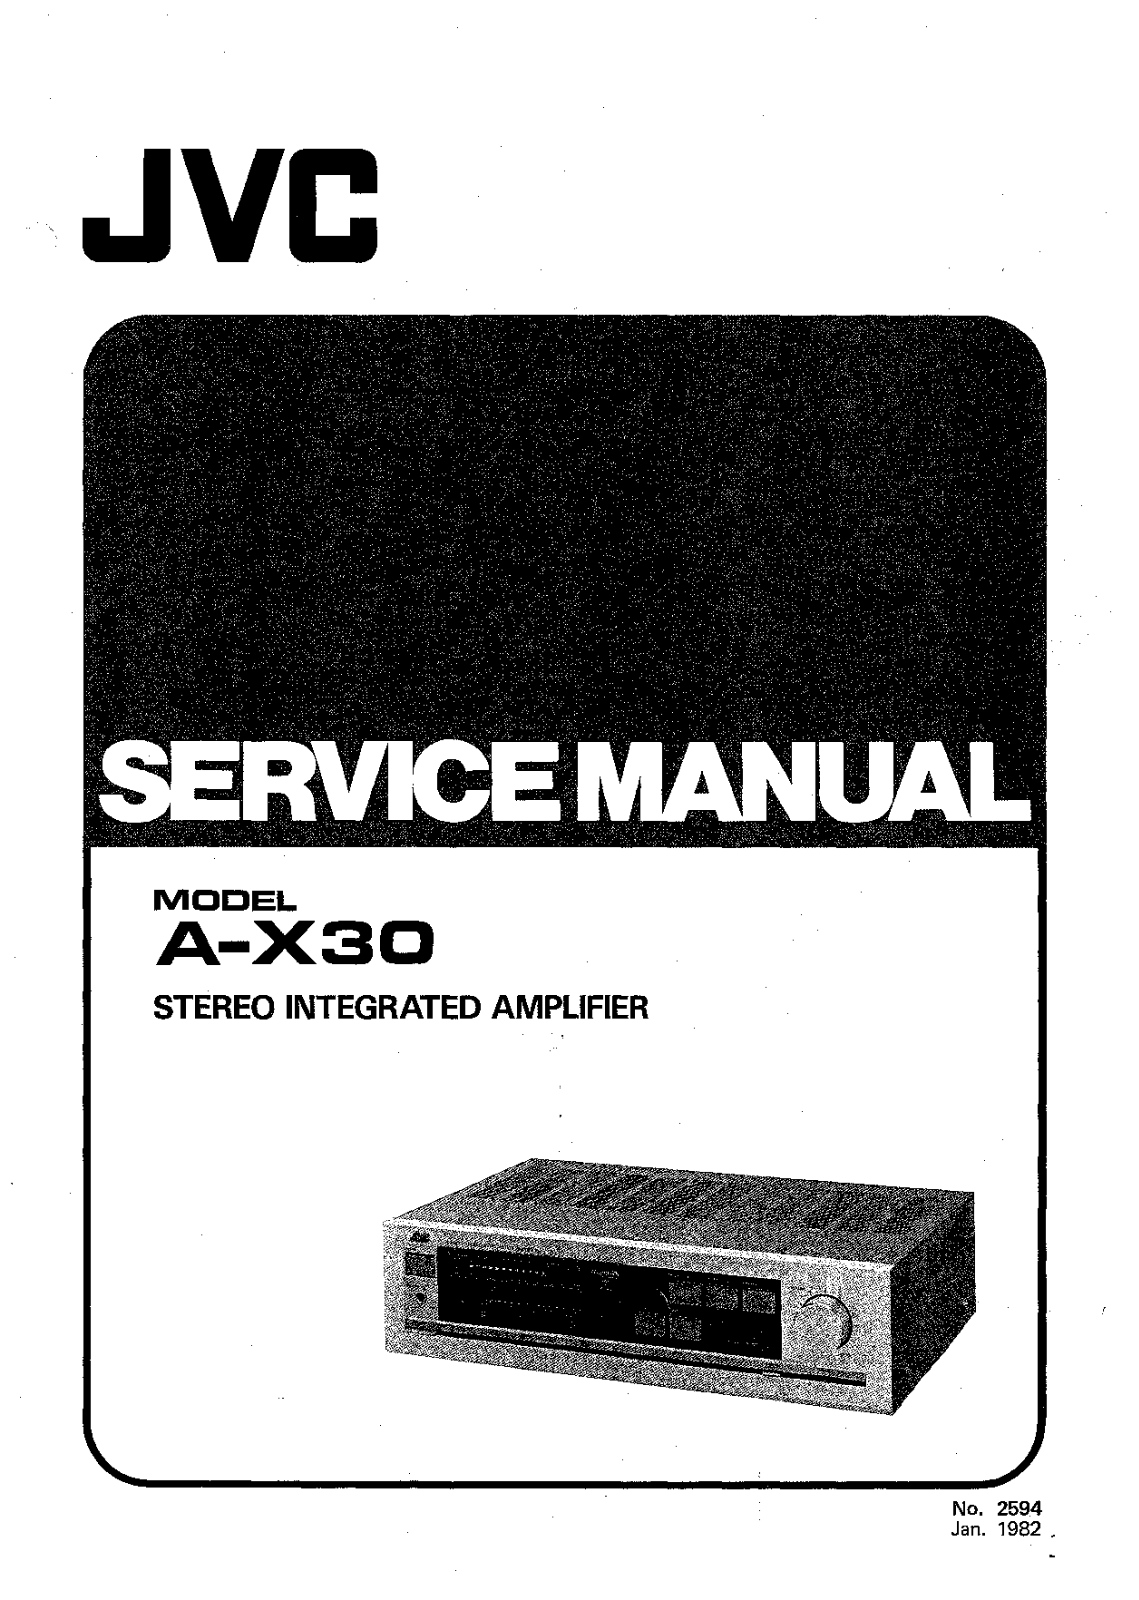 Jvc A-X30 Service Manual